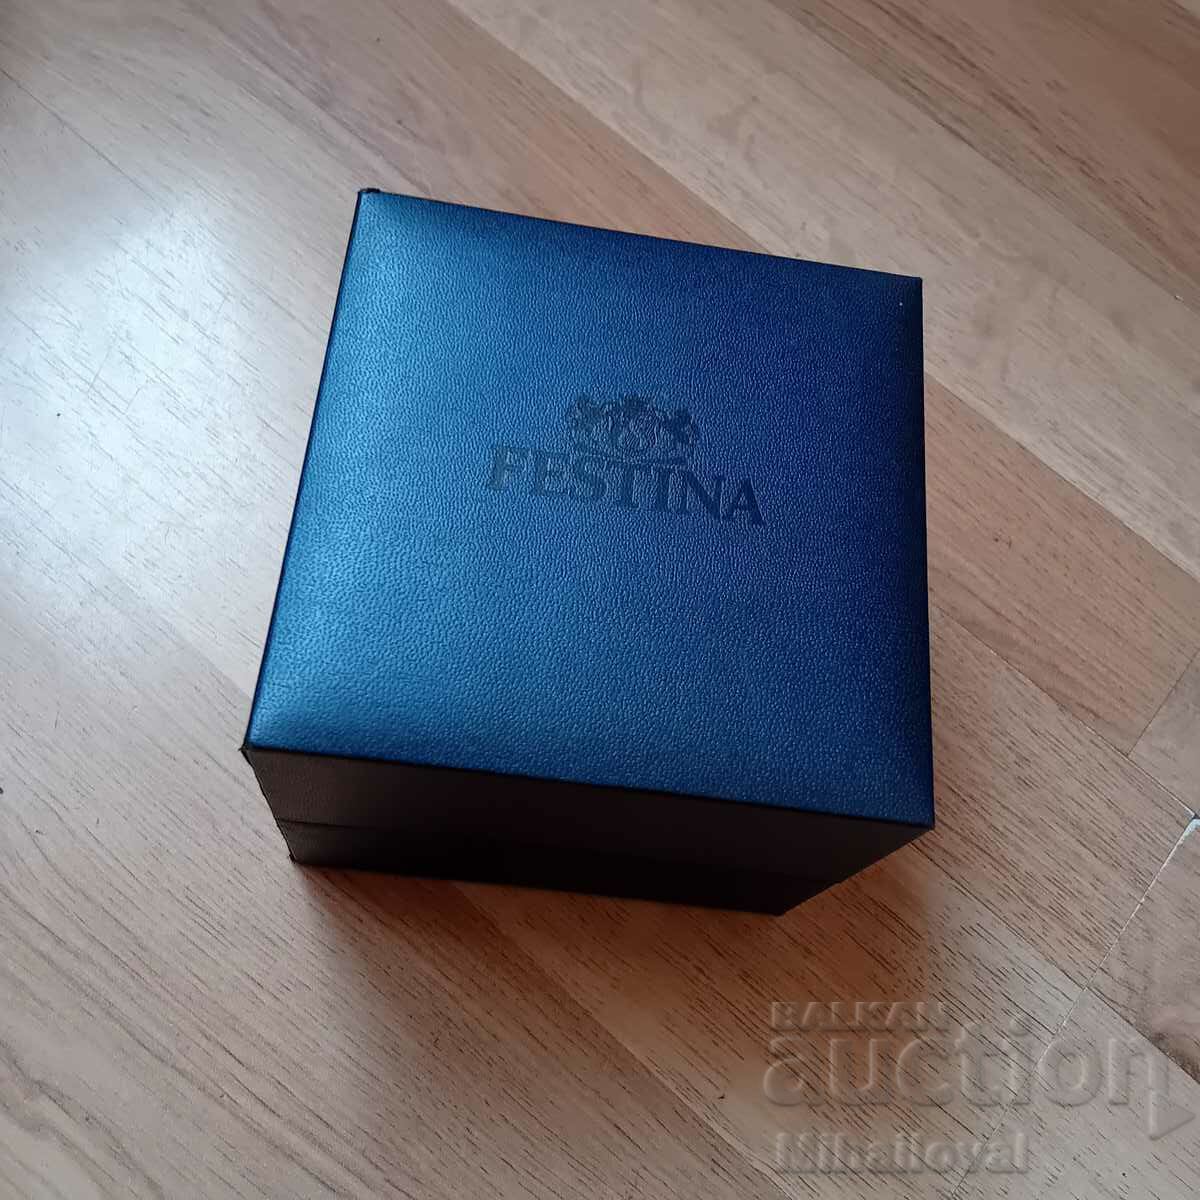 Watch box "Festina"